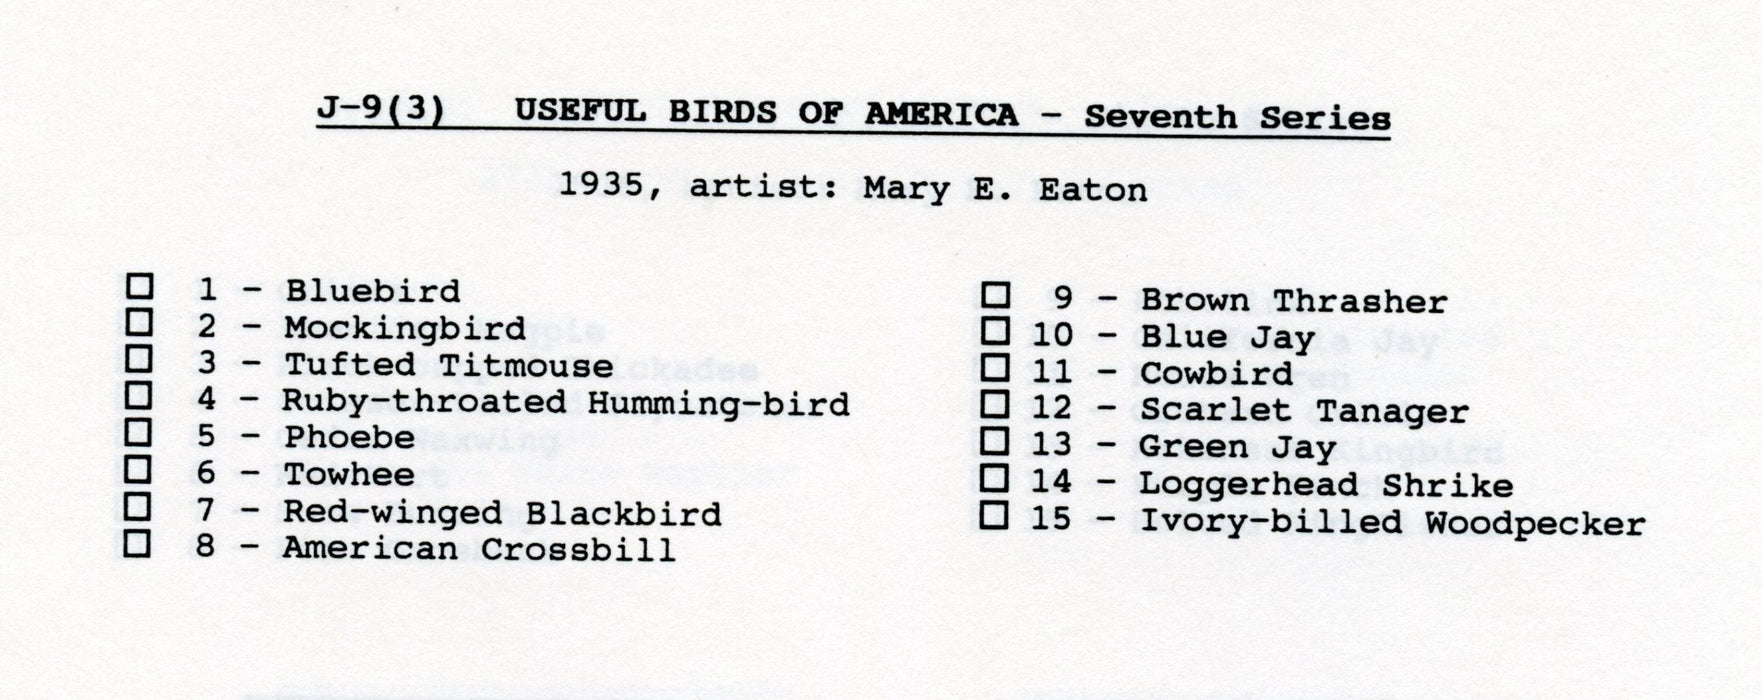 Useful Birds of America 7th 15 Card Set Type 2 Church & Dwight J-9 (3)   - TvMovieCards.com